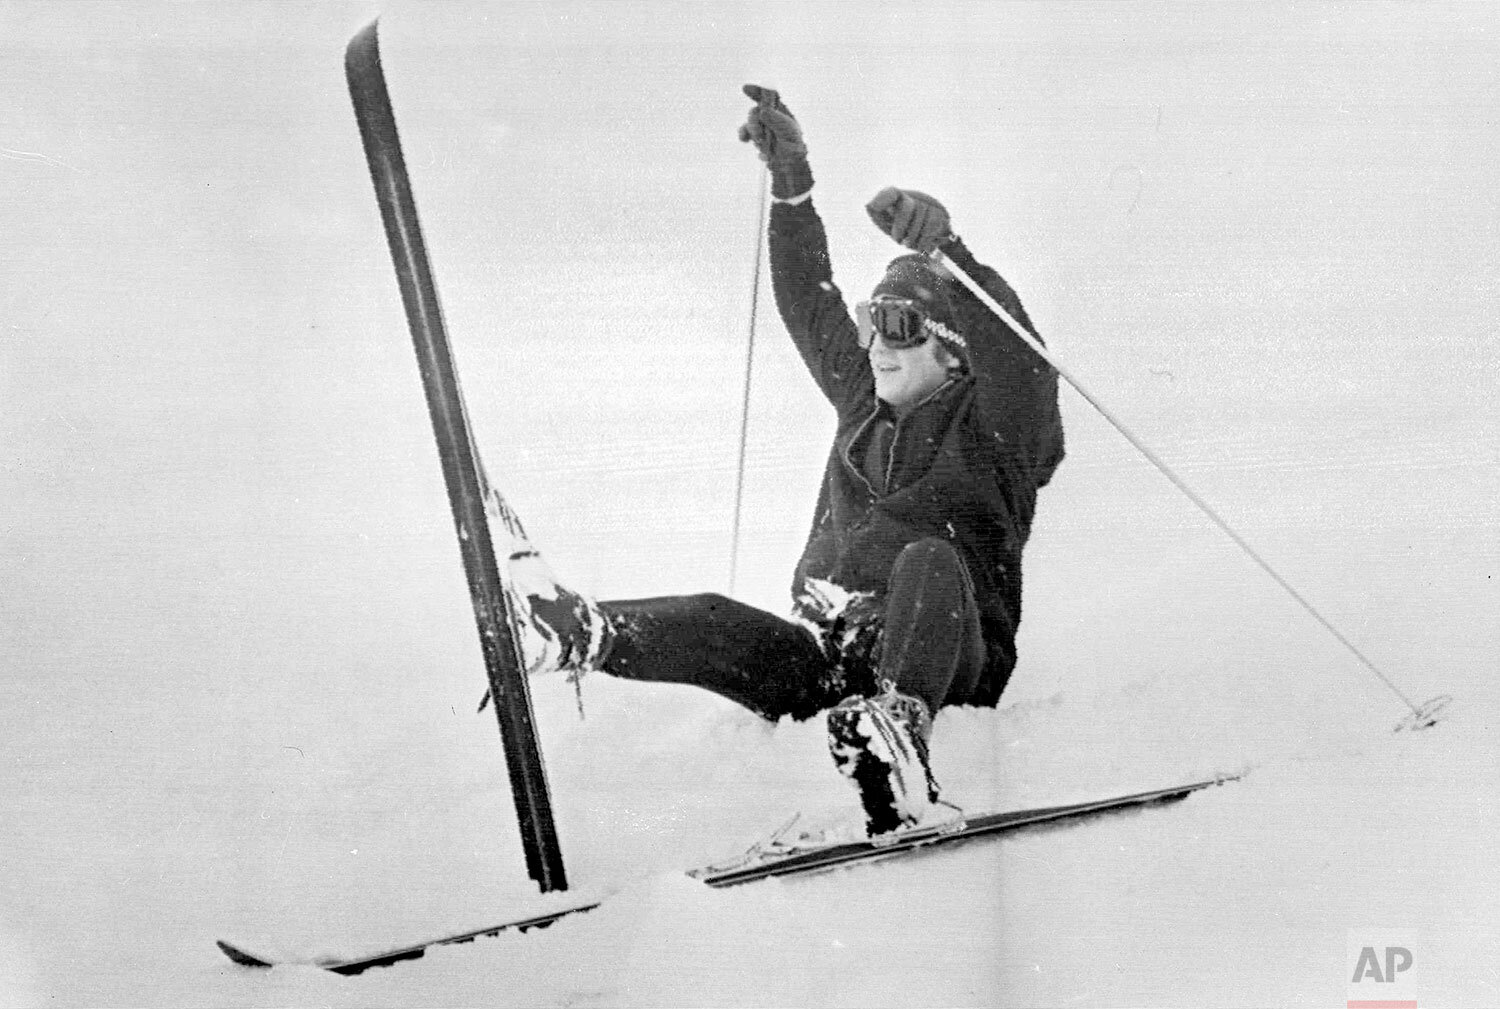  John Lennon, member of the British pop group The Beatles, falls while skiing while on holiday, near St. Moritz, Switzerland, Jan. 28, 1965. (AP Photo) 